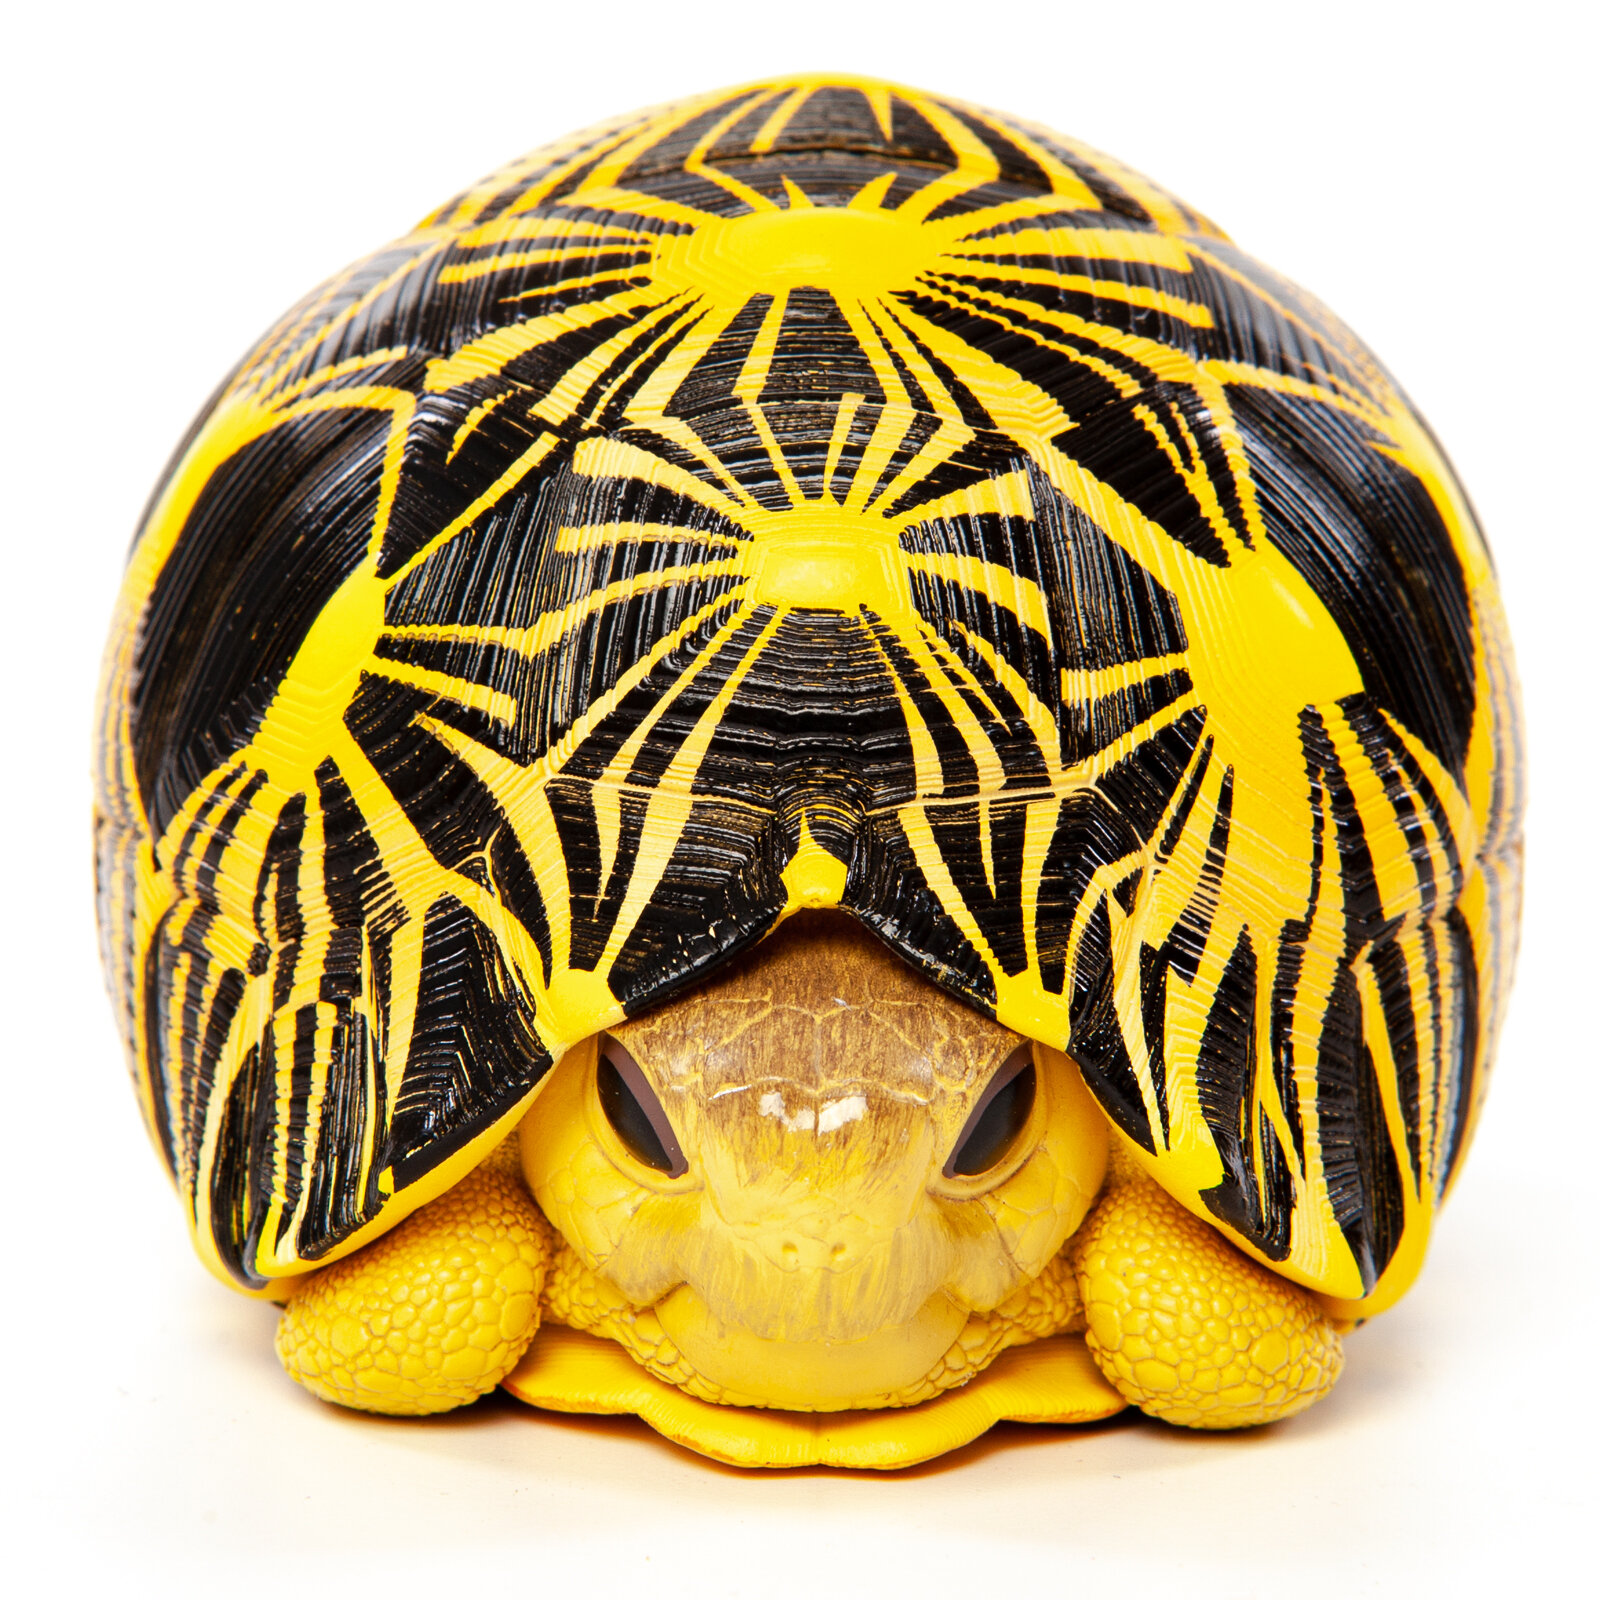 EXOPRIMA Фигурка лучевой черепахи, чёрно-жёлтая EXOPRIMA фигурки - фото №3